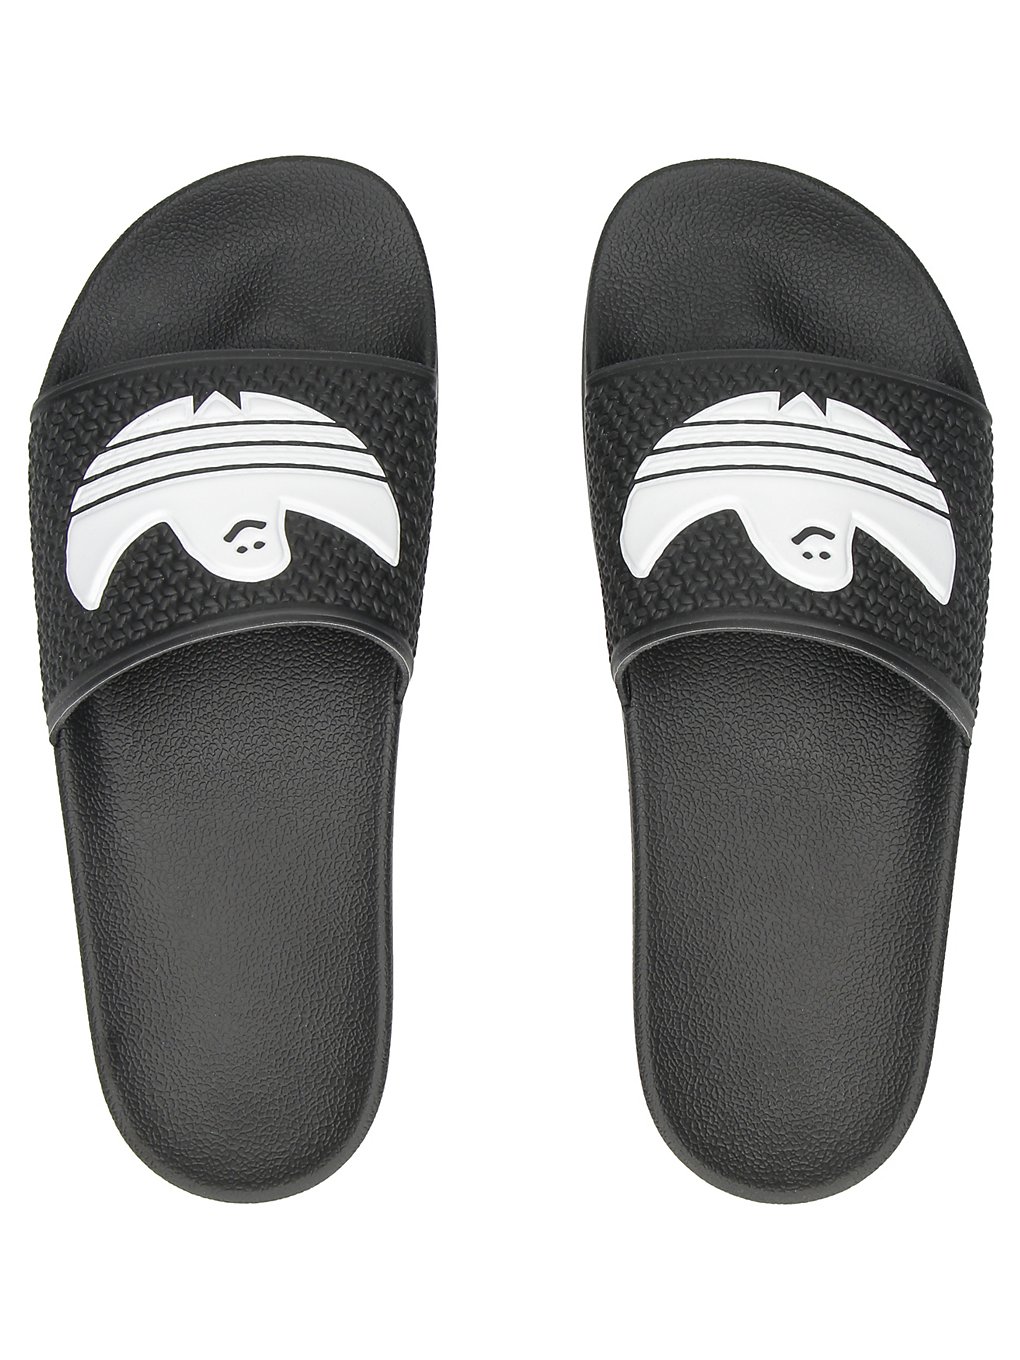 adidas Skateboarding Shmoofoil Sandals noir